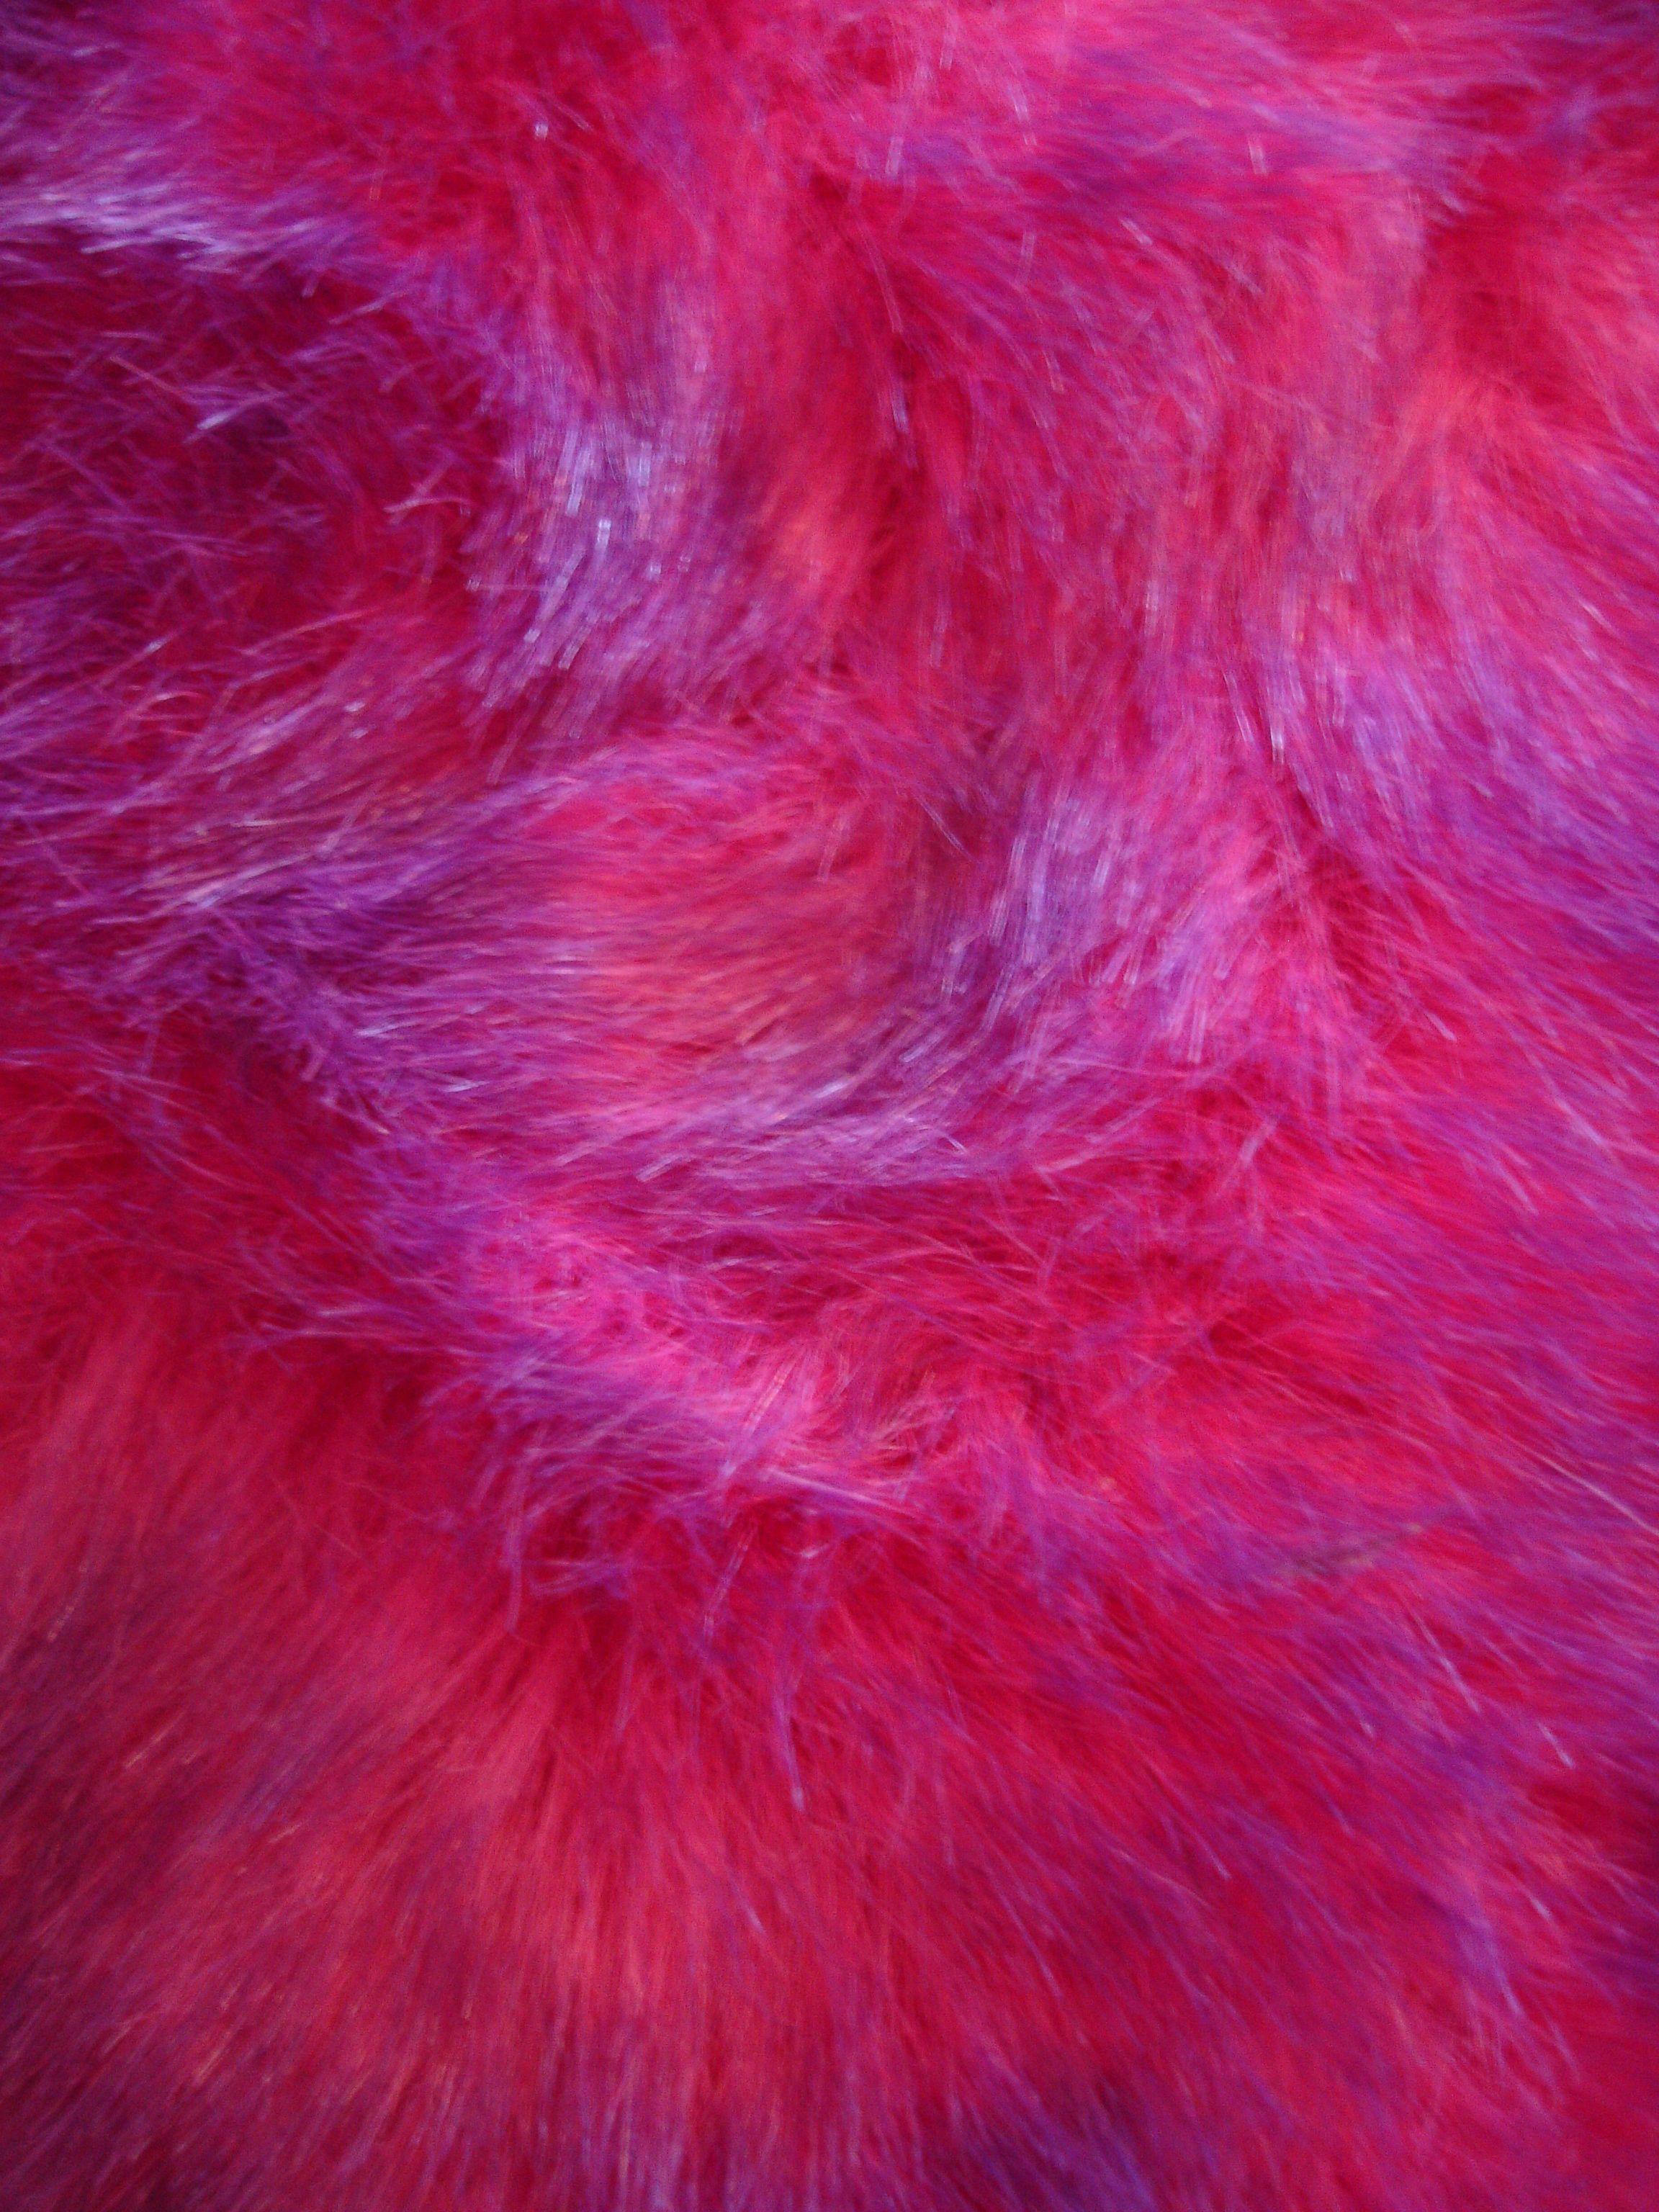 Sheep fur Natural color sheepskin  Pink fur wallpaper Fur textures Fur